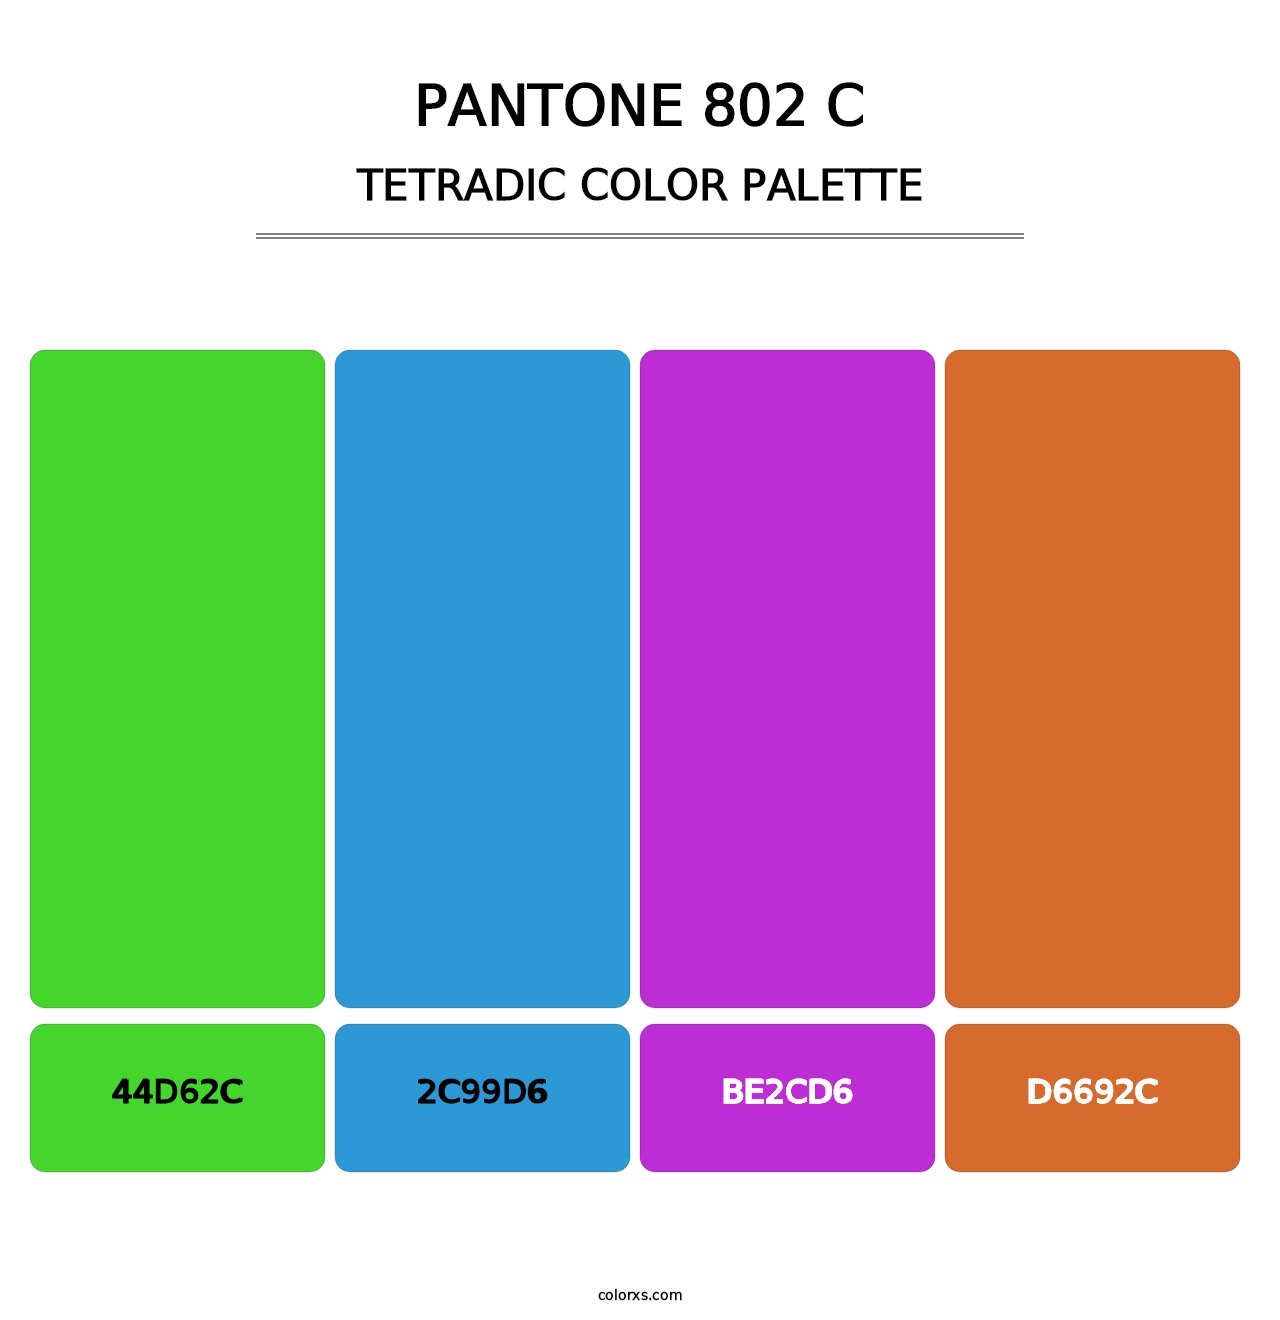 PANTONE 802 C - Tetradic Color Palette